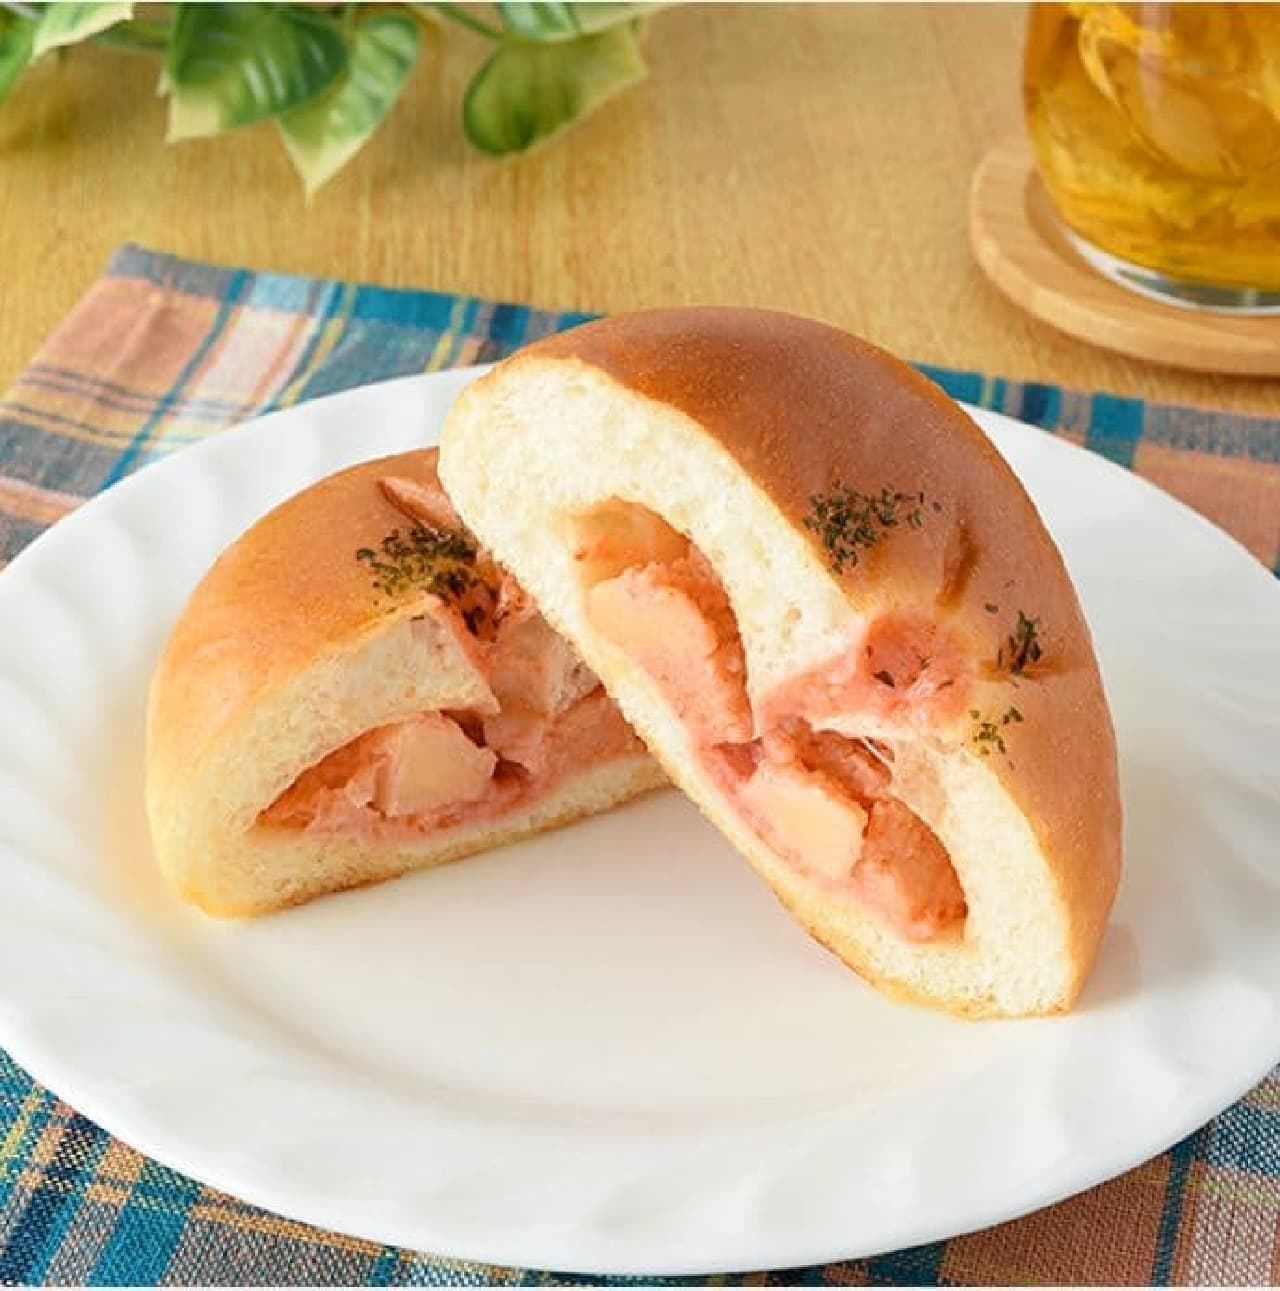 FamilyMart "Mentaiko Potato Bread with a chunky texture